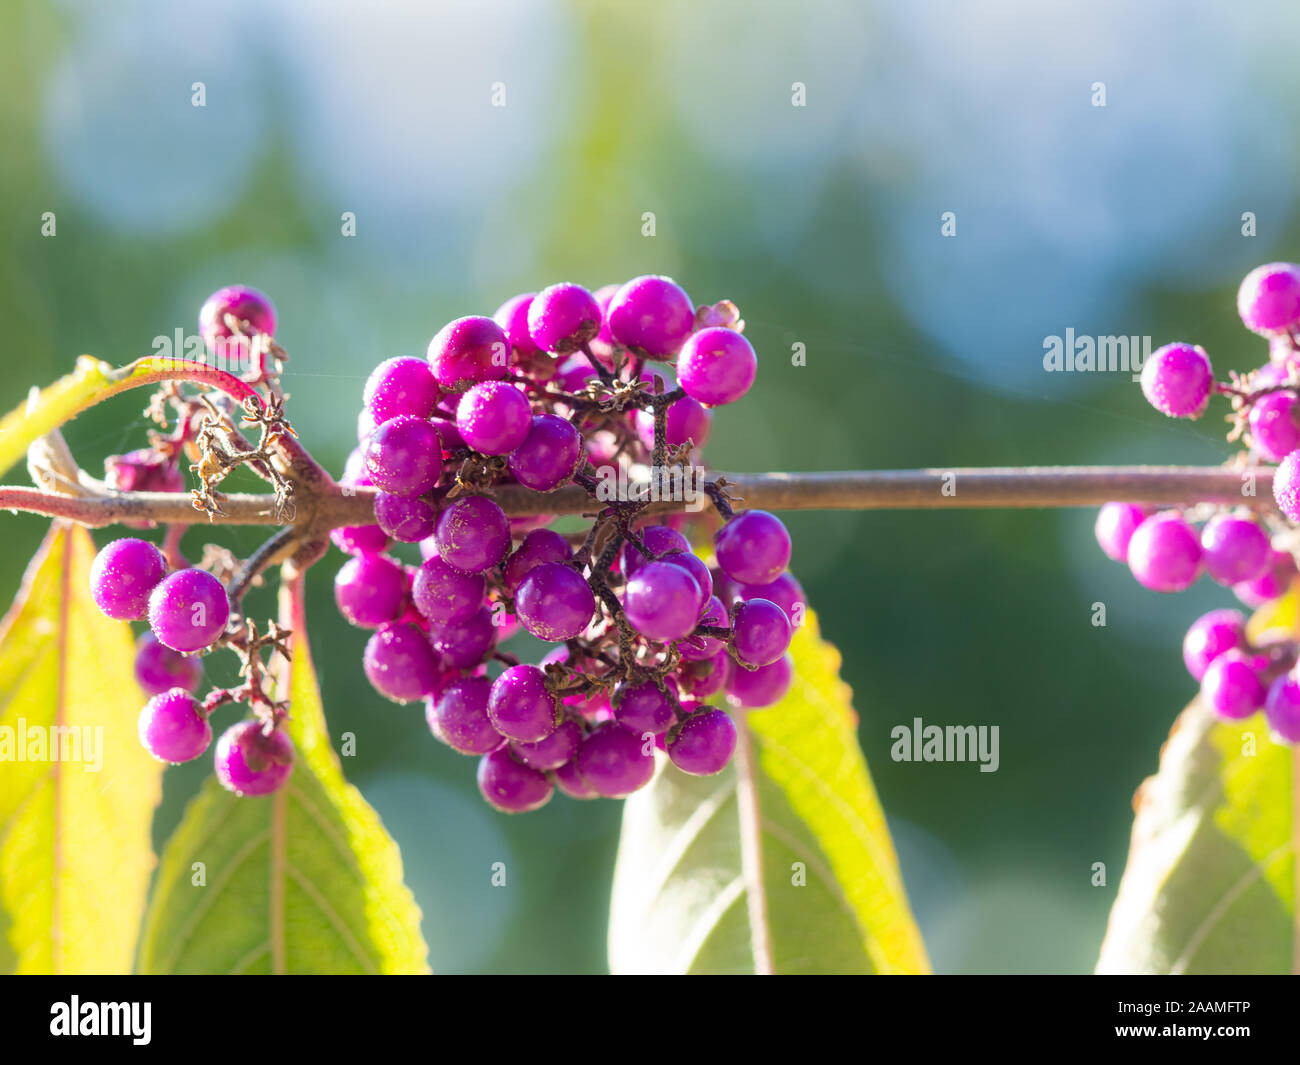 Plant with purple things that look like berries. Germany : r/whatsthisplant